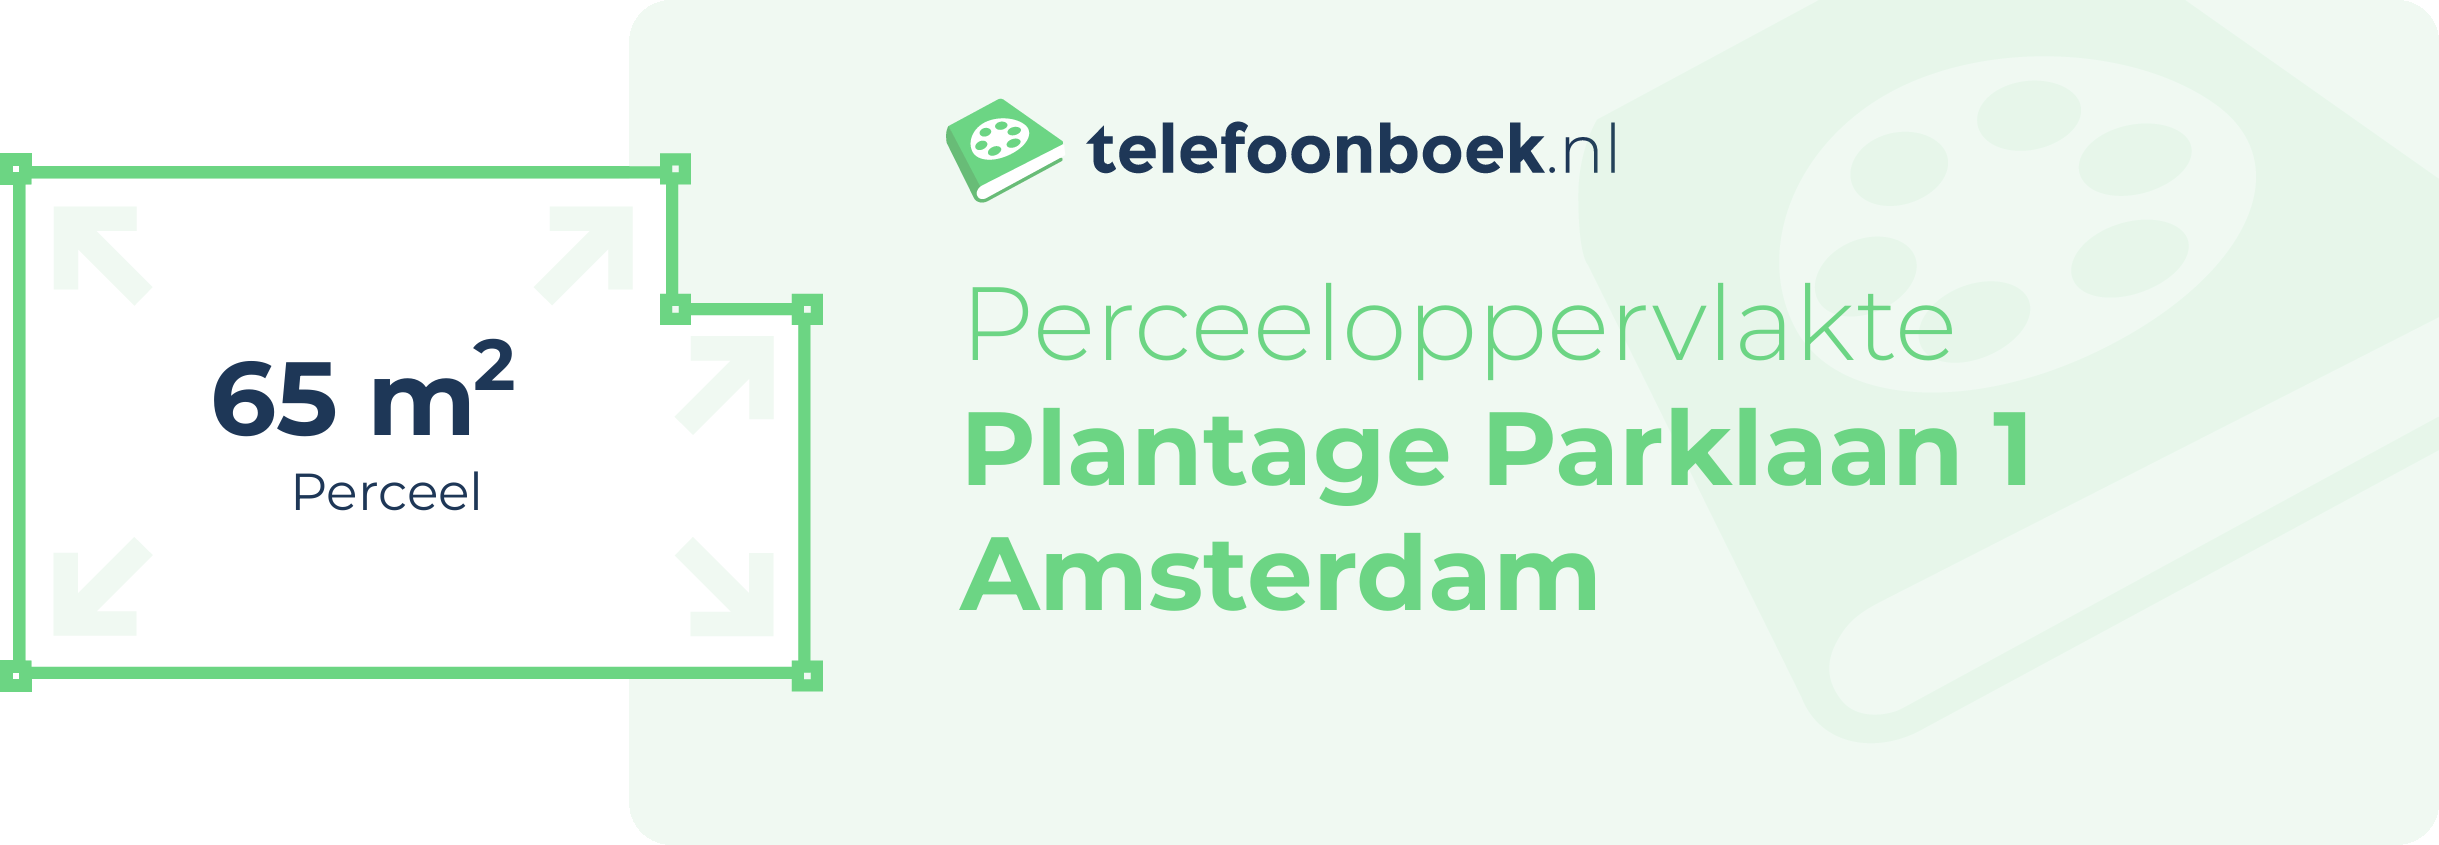 Perceeloppervlakte Plantage Parklaan 1 Amsterdam